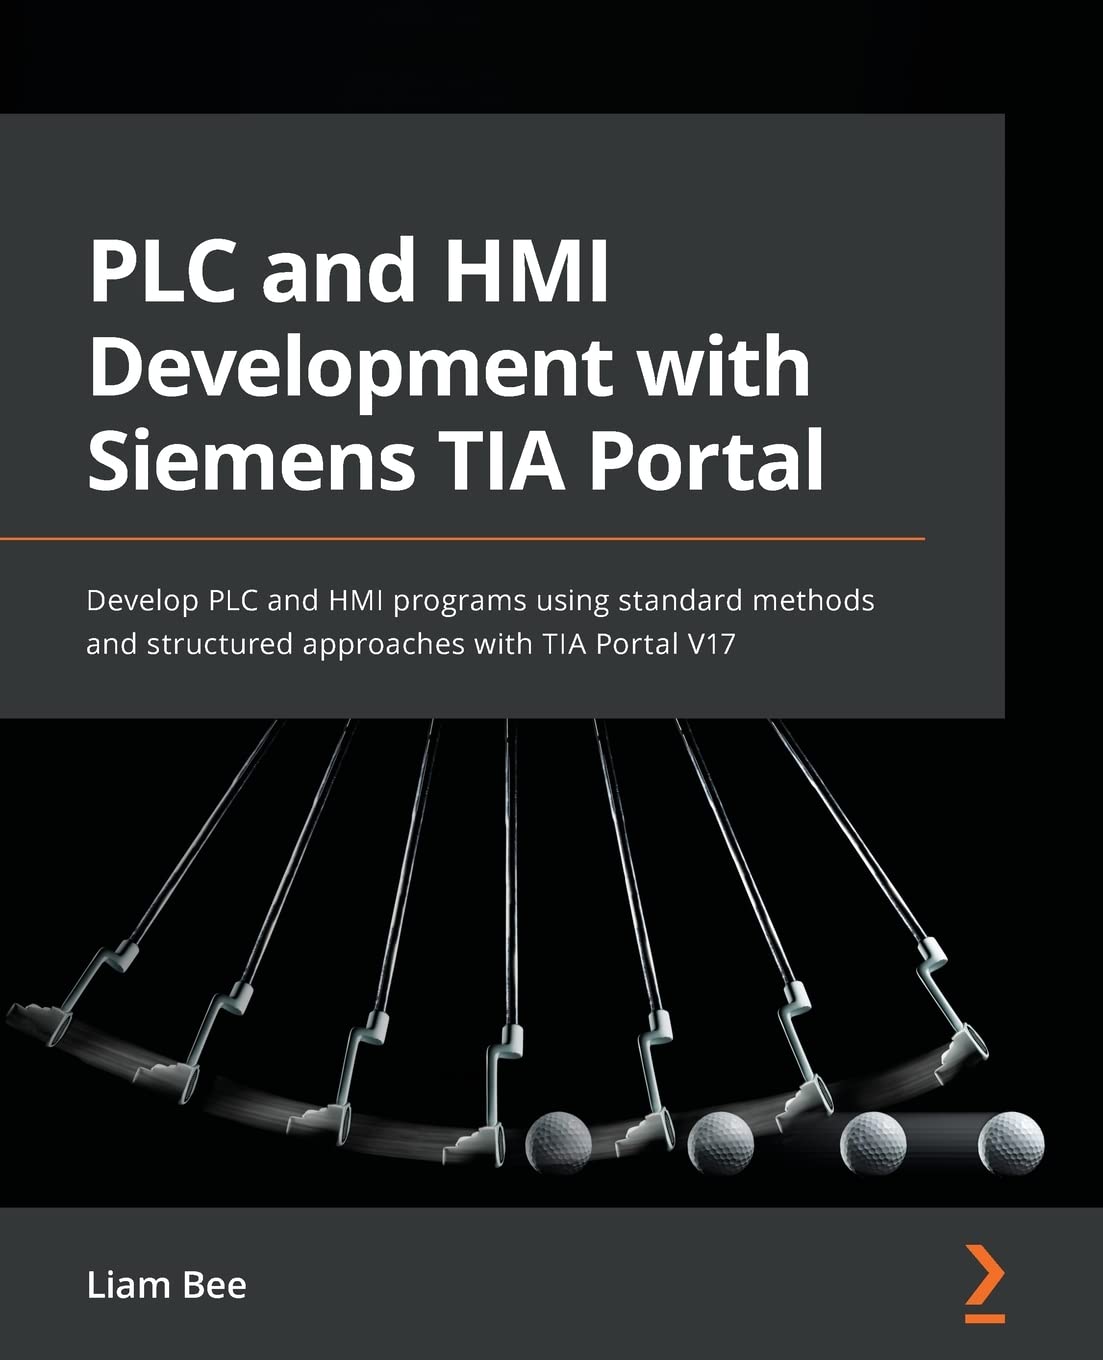 Siemens TIA Portal V17